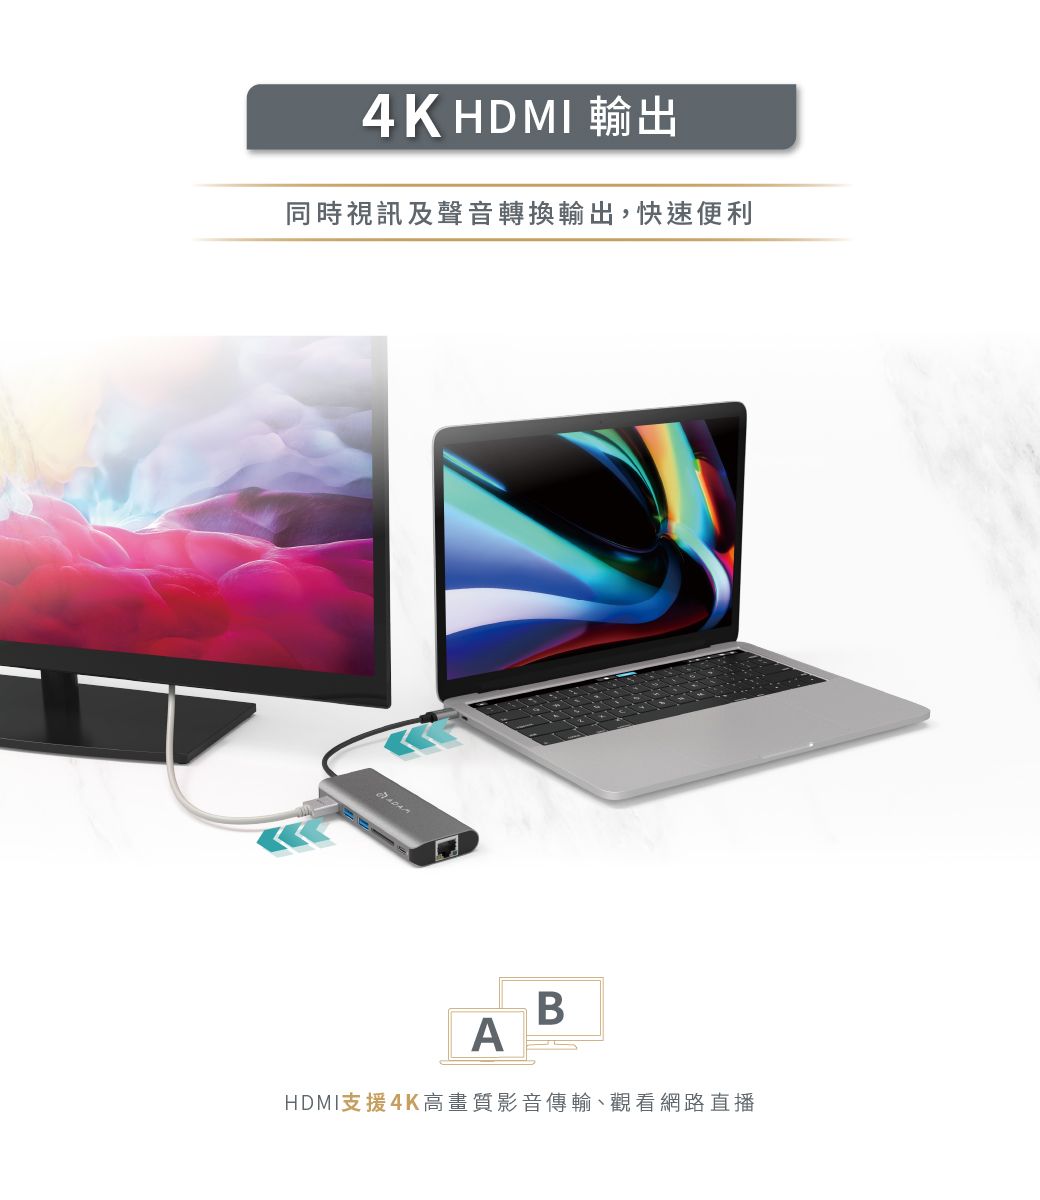 4K HDMI 輸出同時視訊及聲音轉換輸出,快速便利BAHDMI支援4K高畫質影音傳輸、觀看網路直播